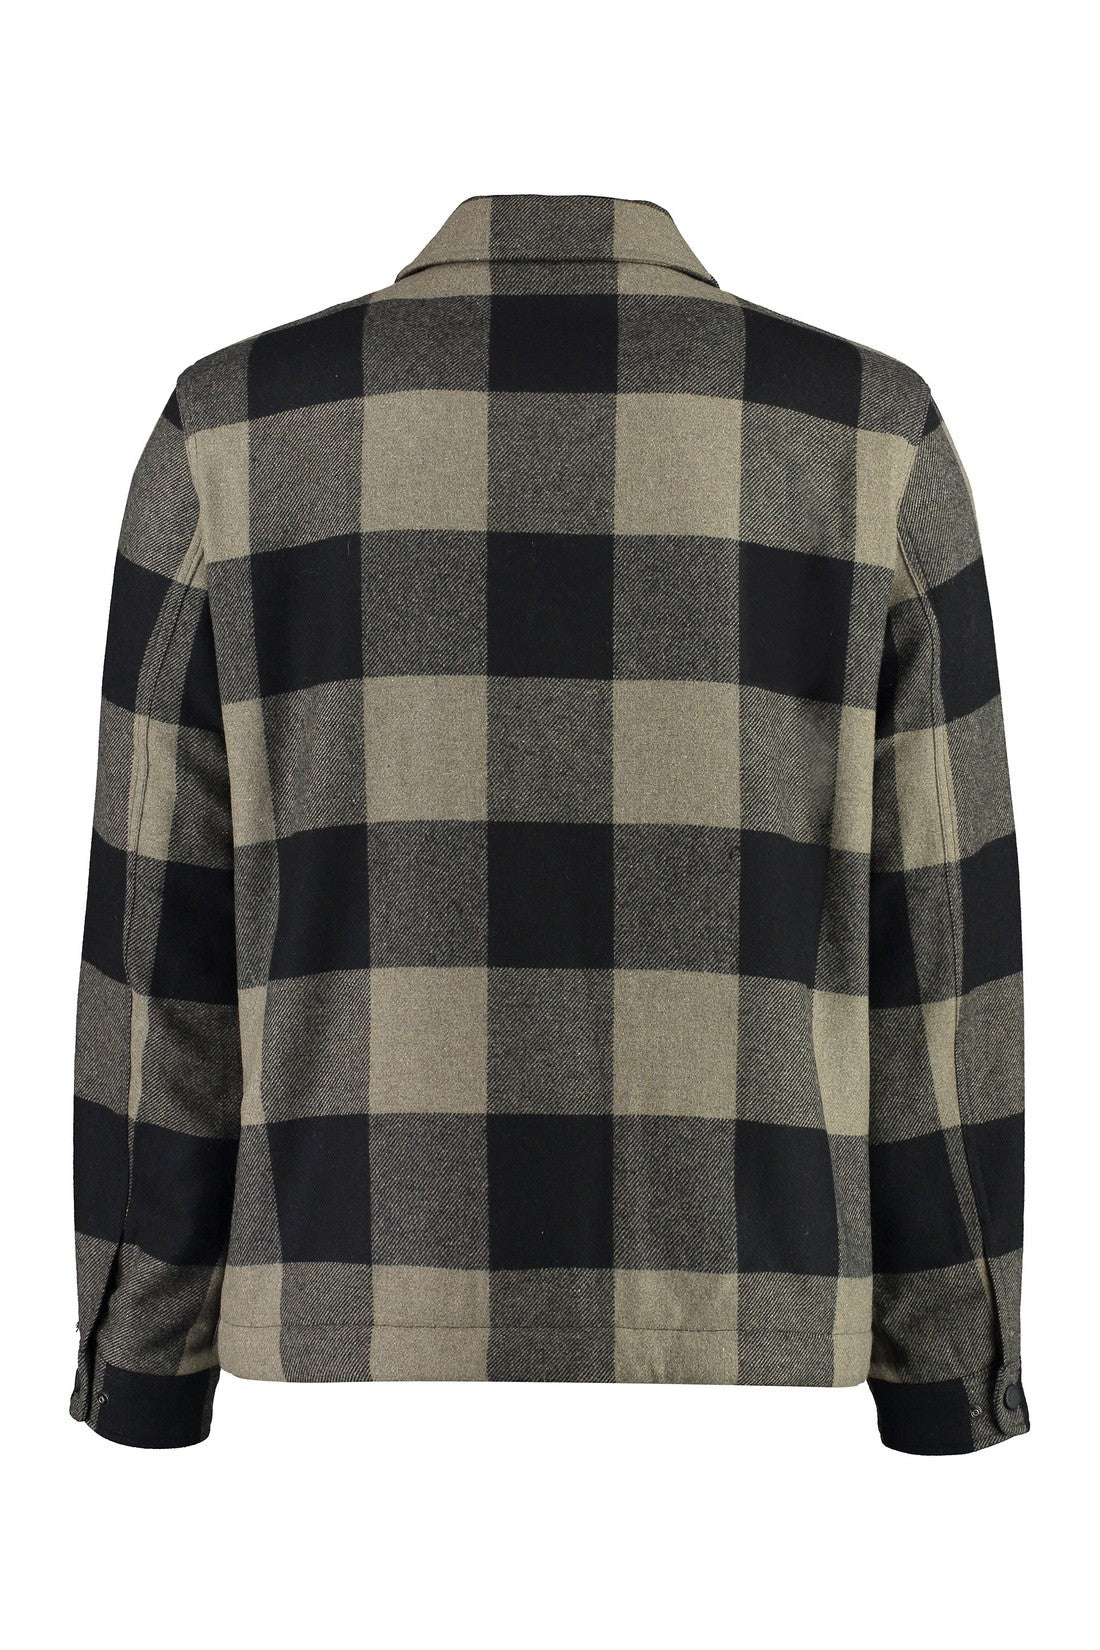 Woolrich-OUTLET-SALE-Wool blend overshirt-ARCHIVIST